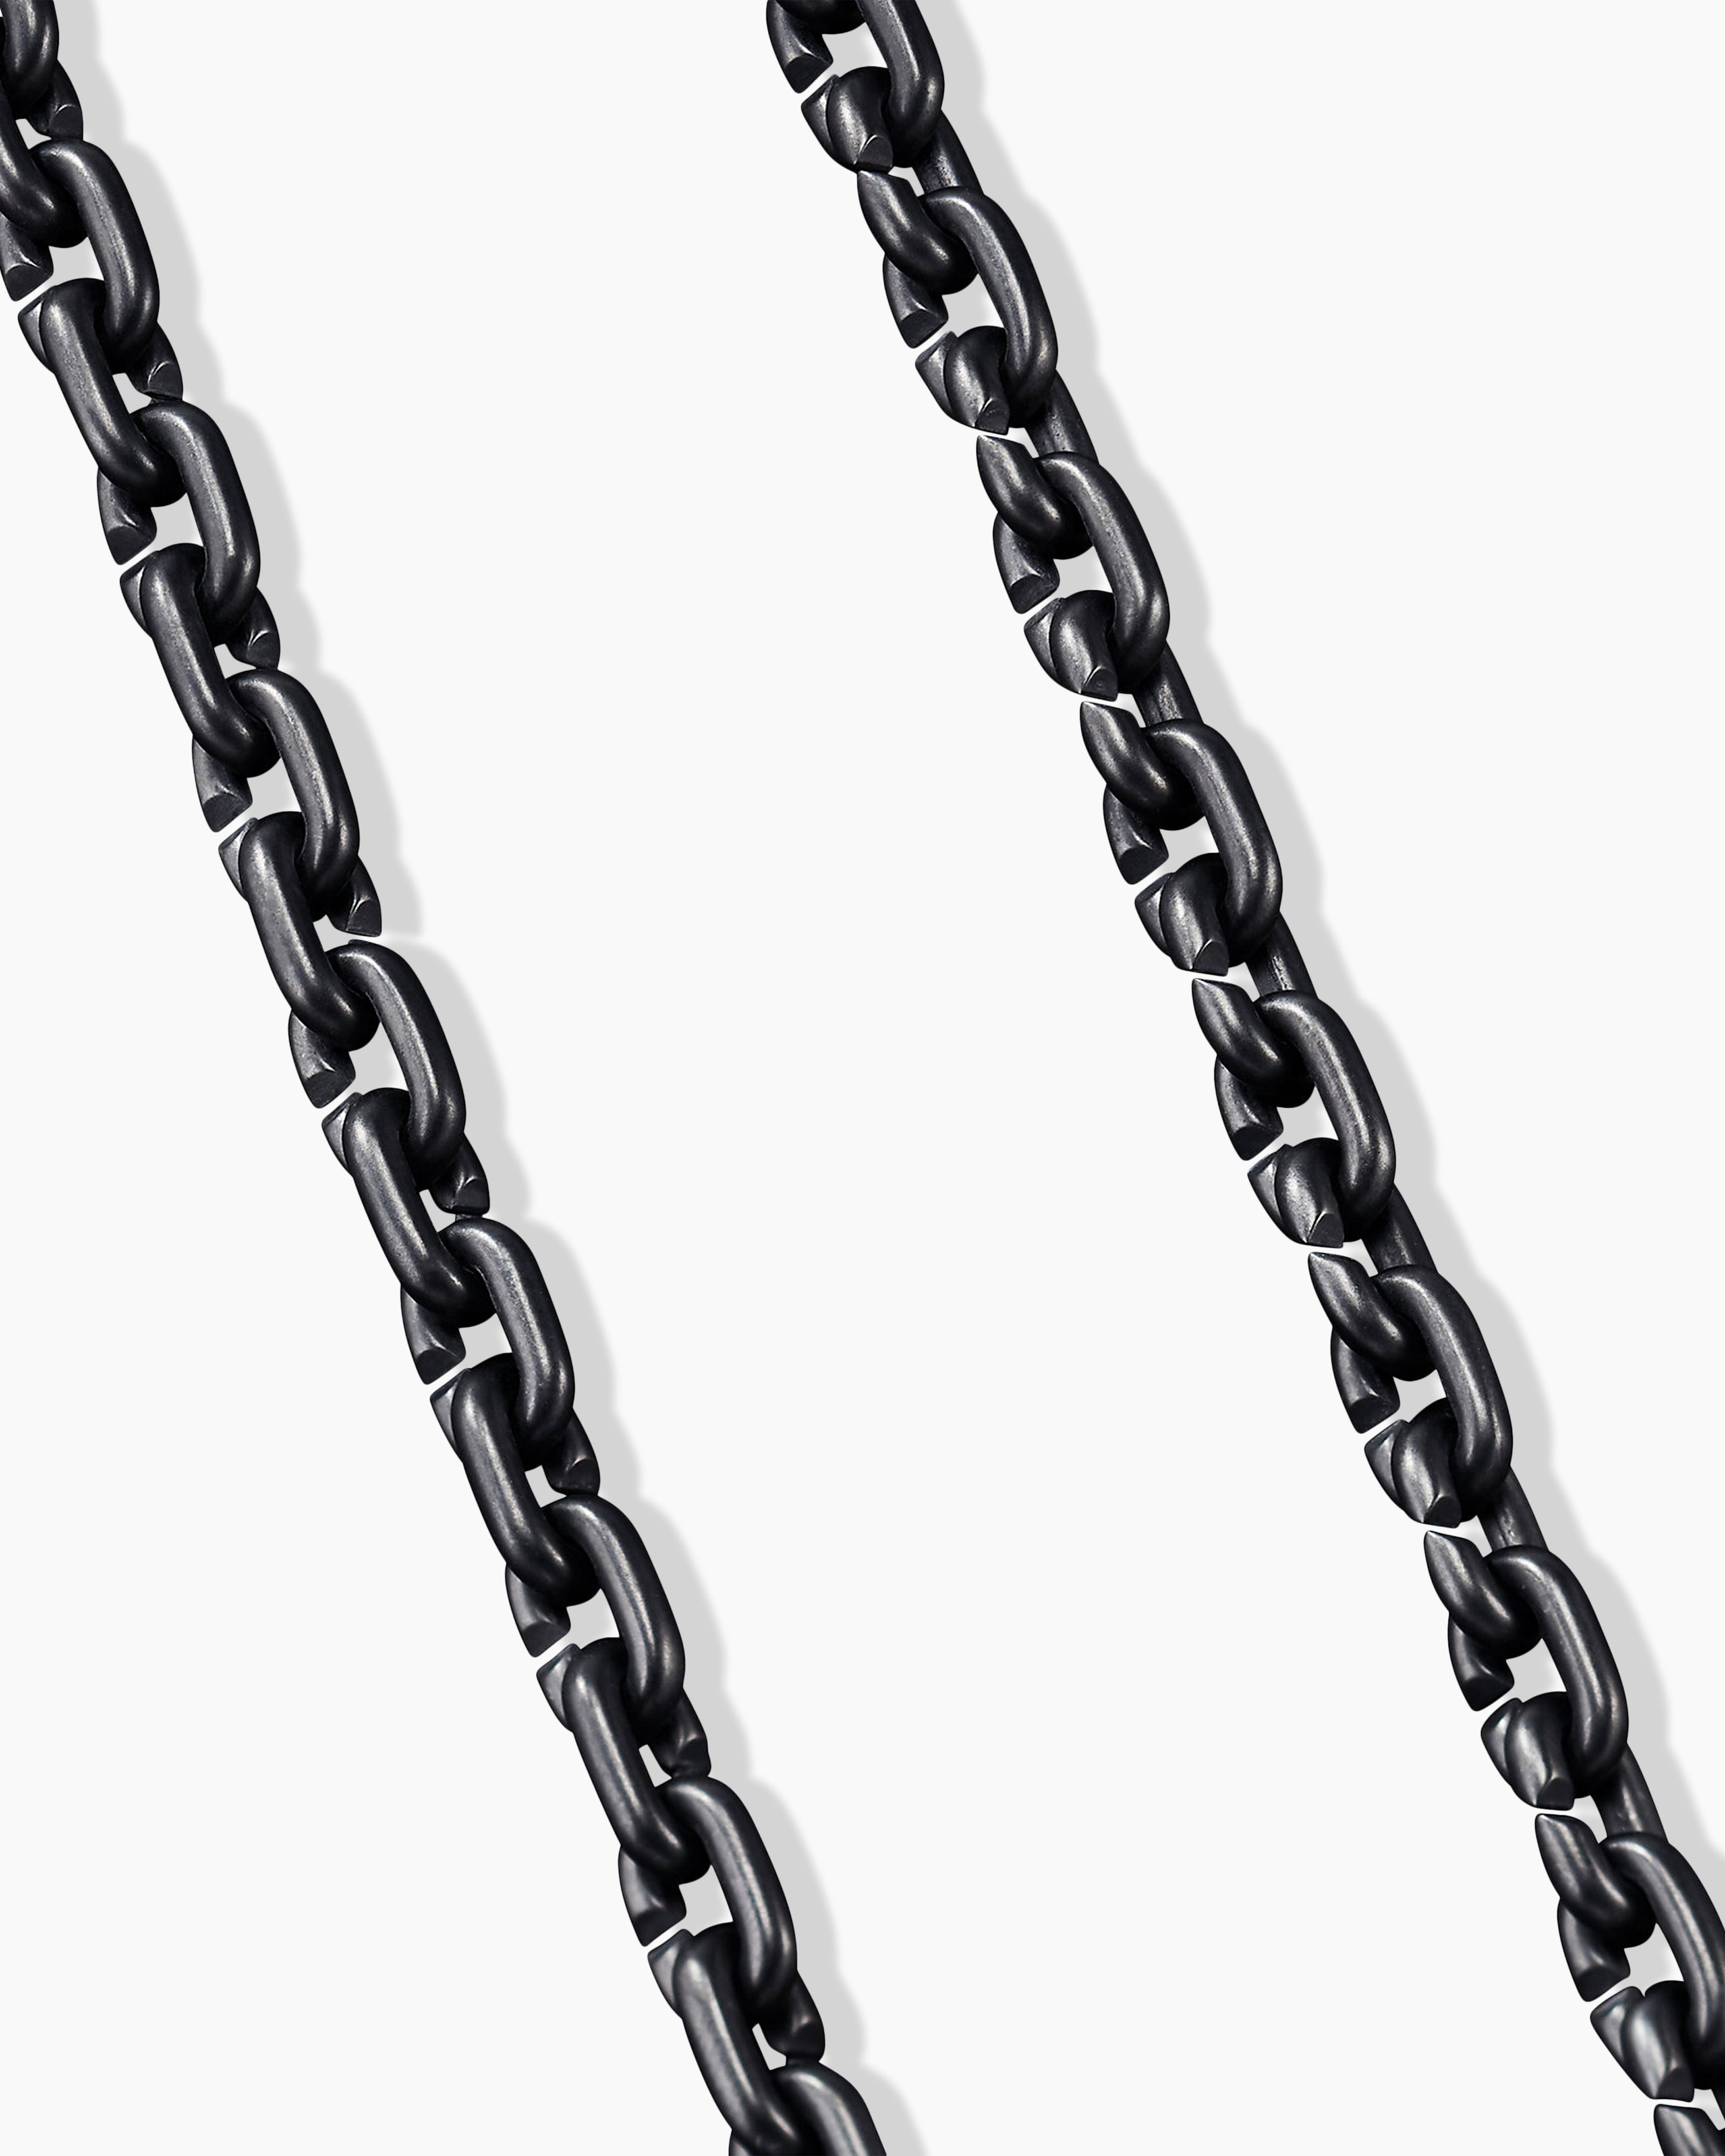 Chain Links Necklace in Black Titanium